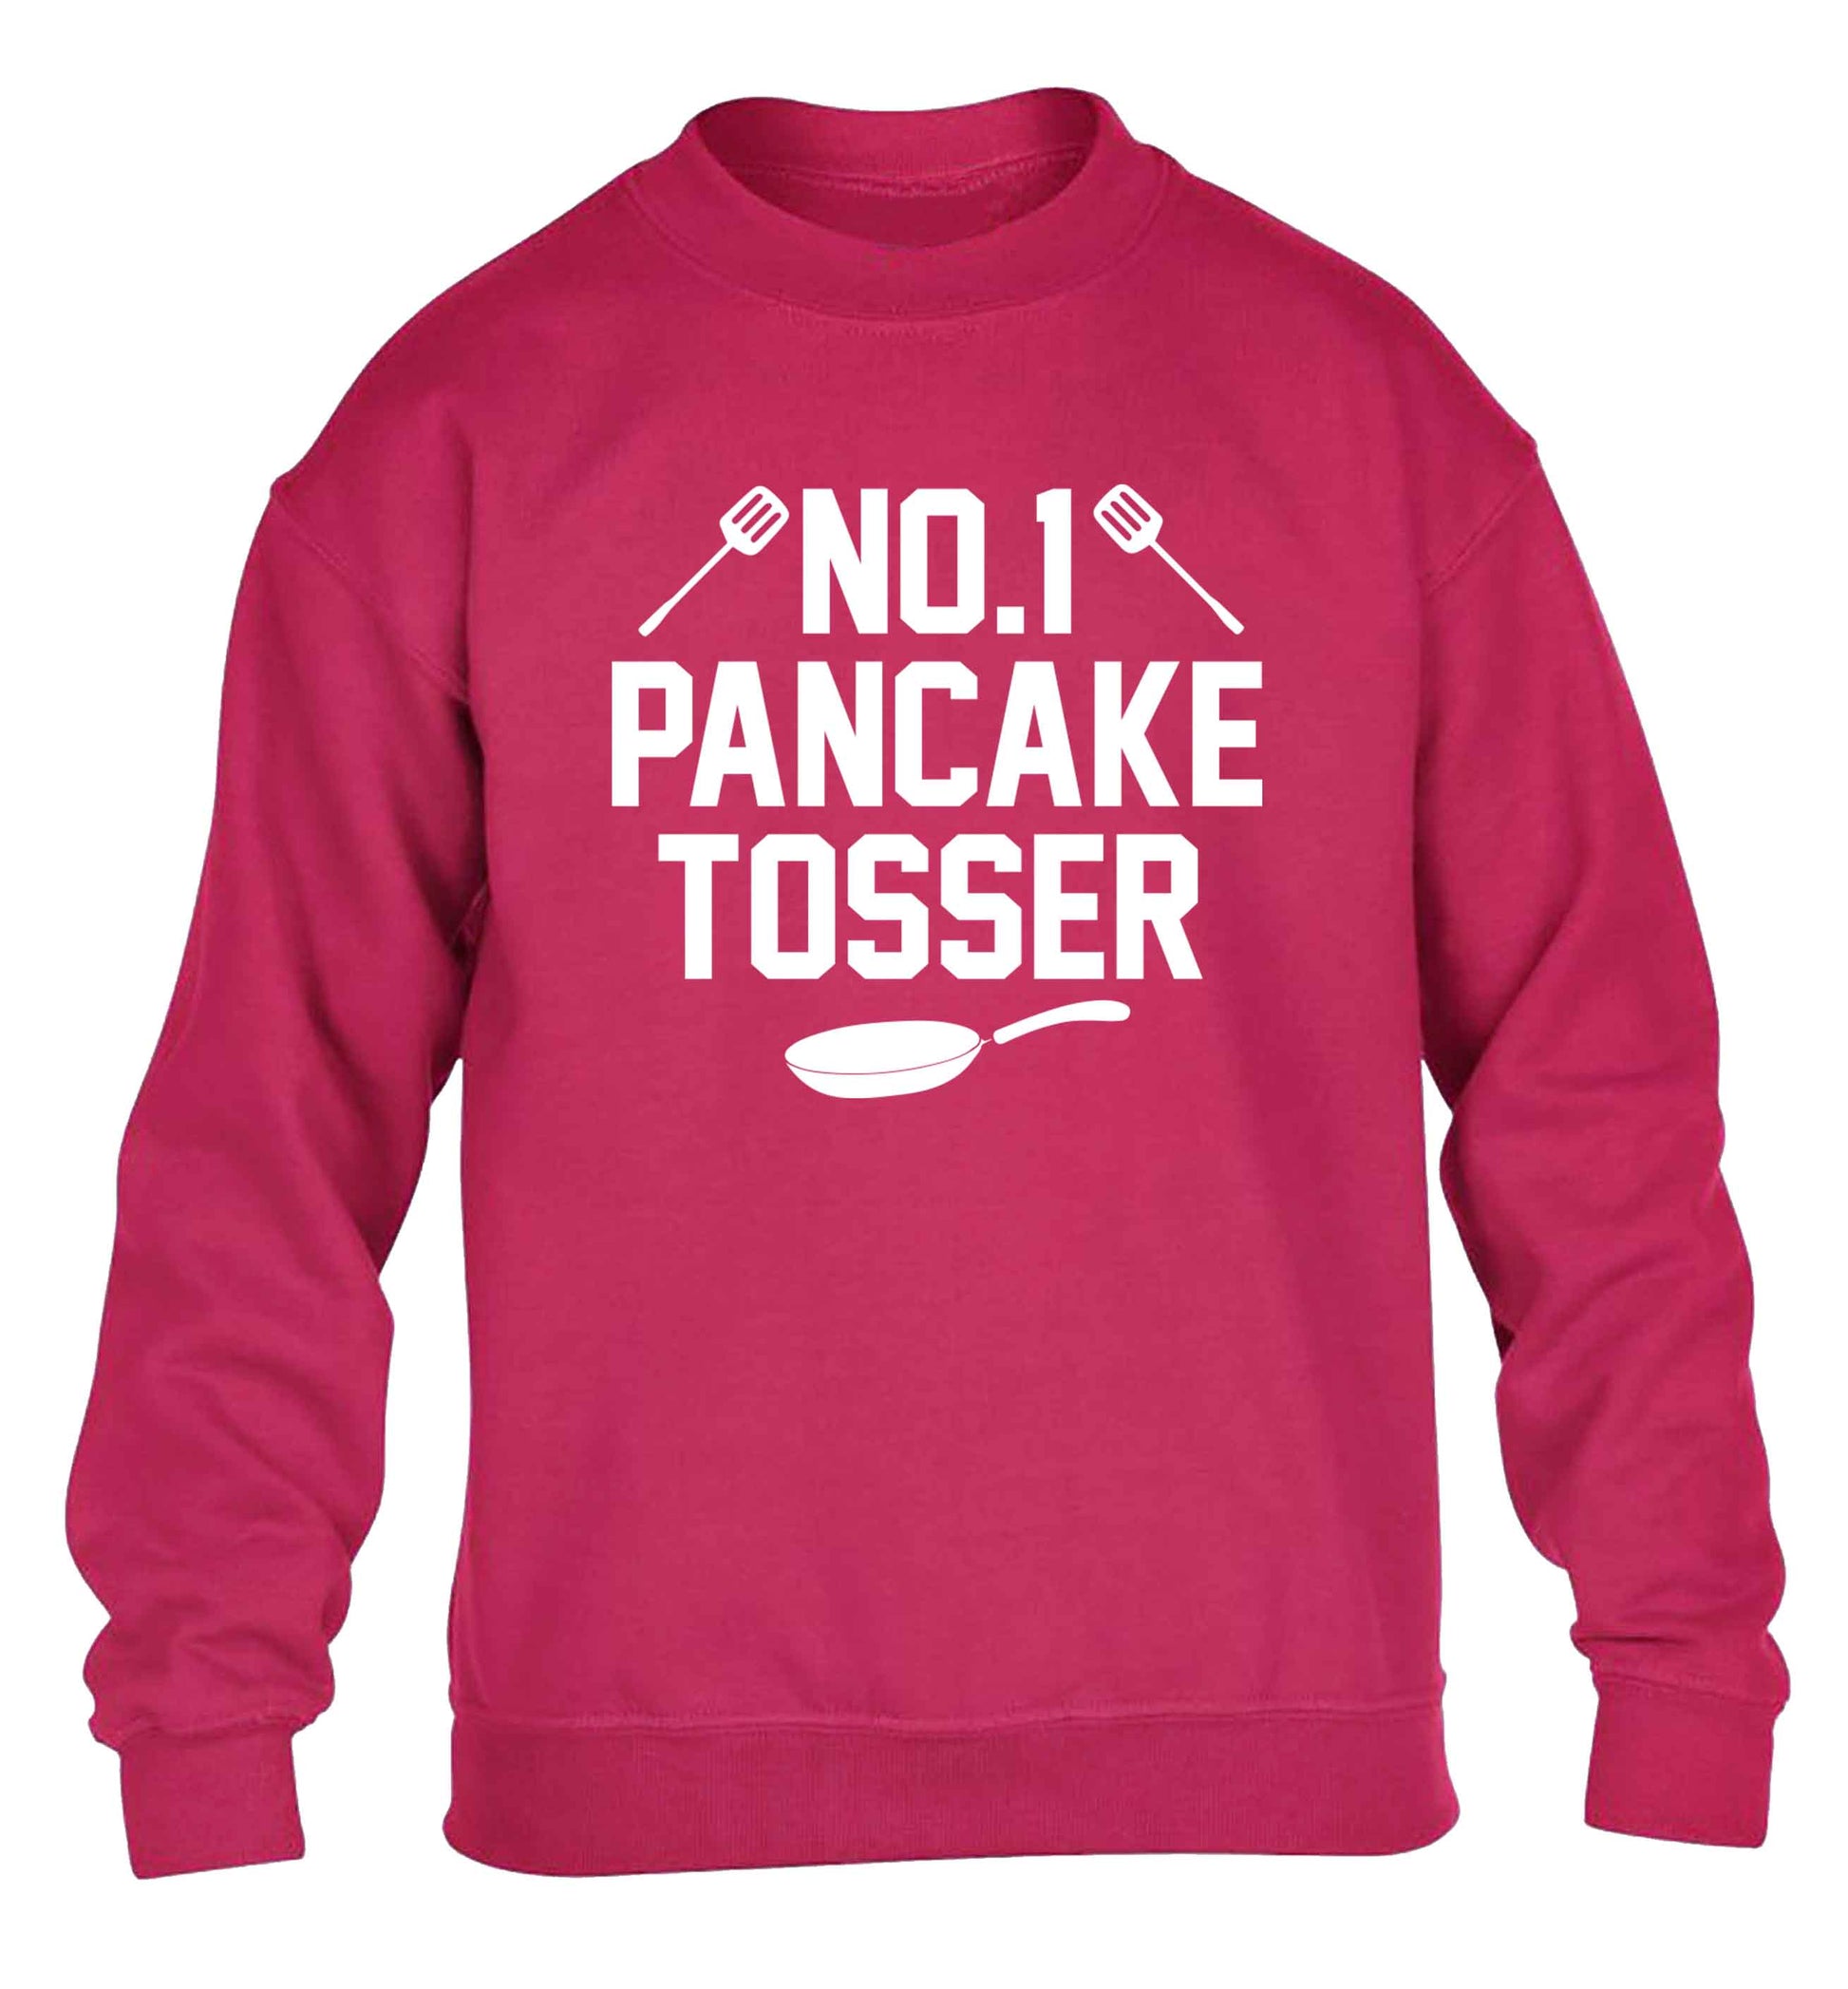 No.1 Pancake tosser children's pink sweater 12-13 Years